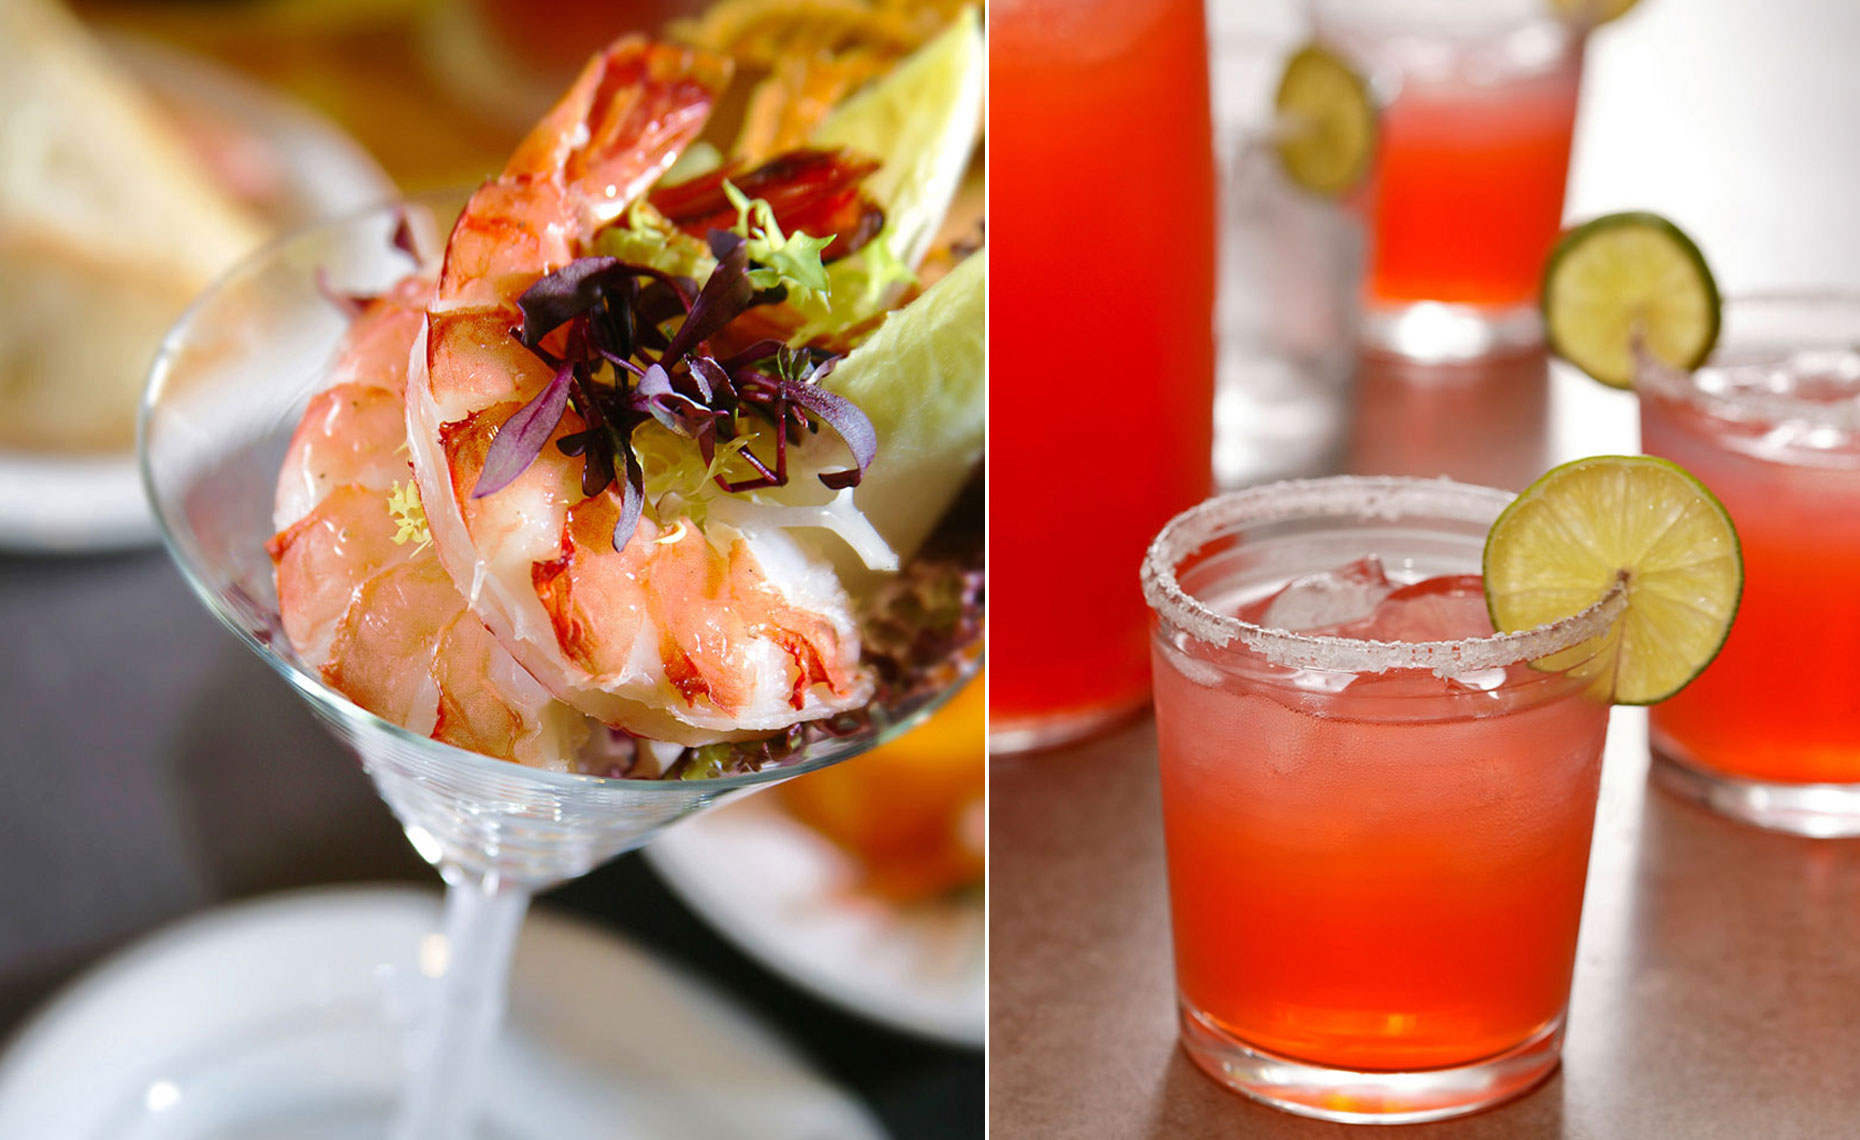 jeff-green-shrimp-cocktail-at-four-seasons-and-margaritas